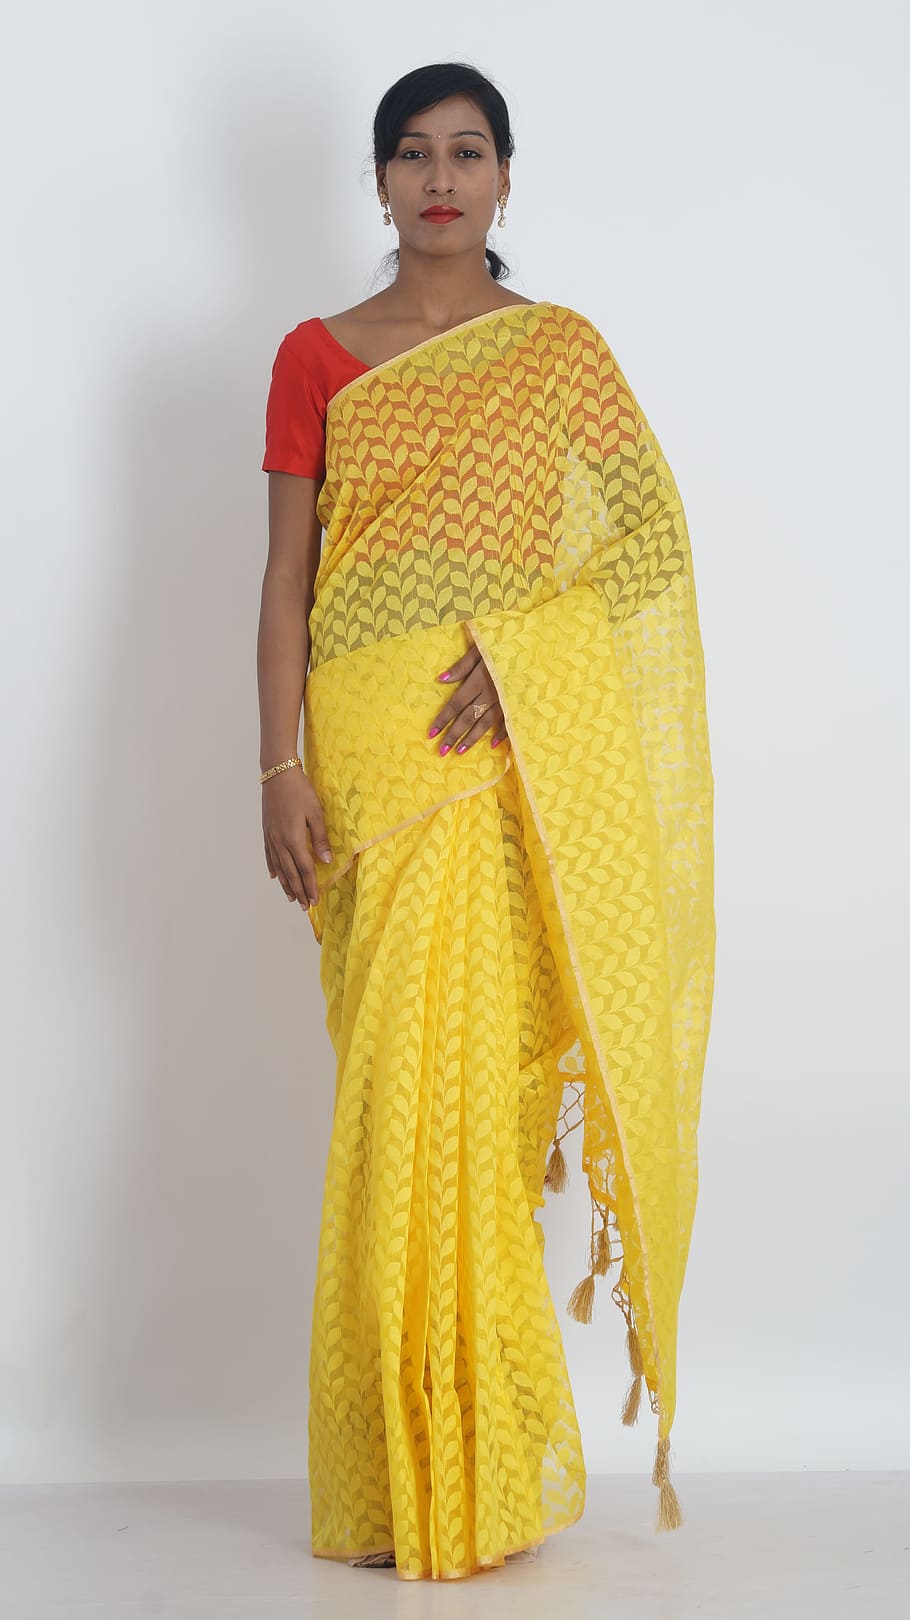 Sarees, Cor amarela, Saris, Womens, Desgaste, saris de cor amarela, desgaste das mulheres, vestuário indiano, tradicional, amarelo